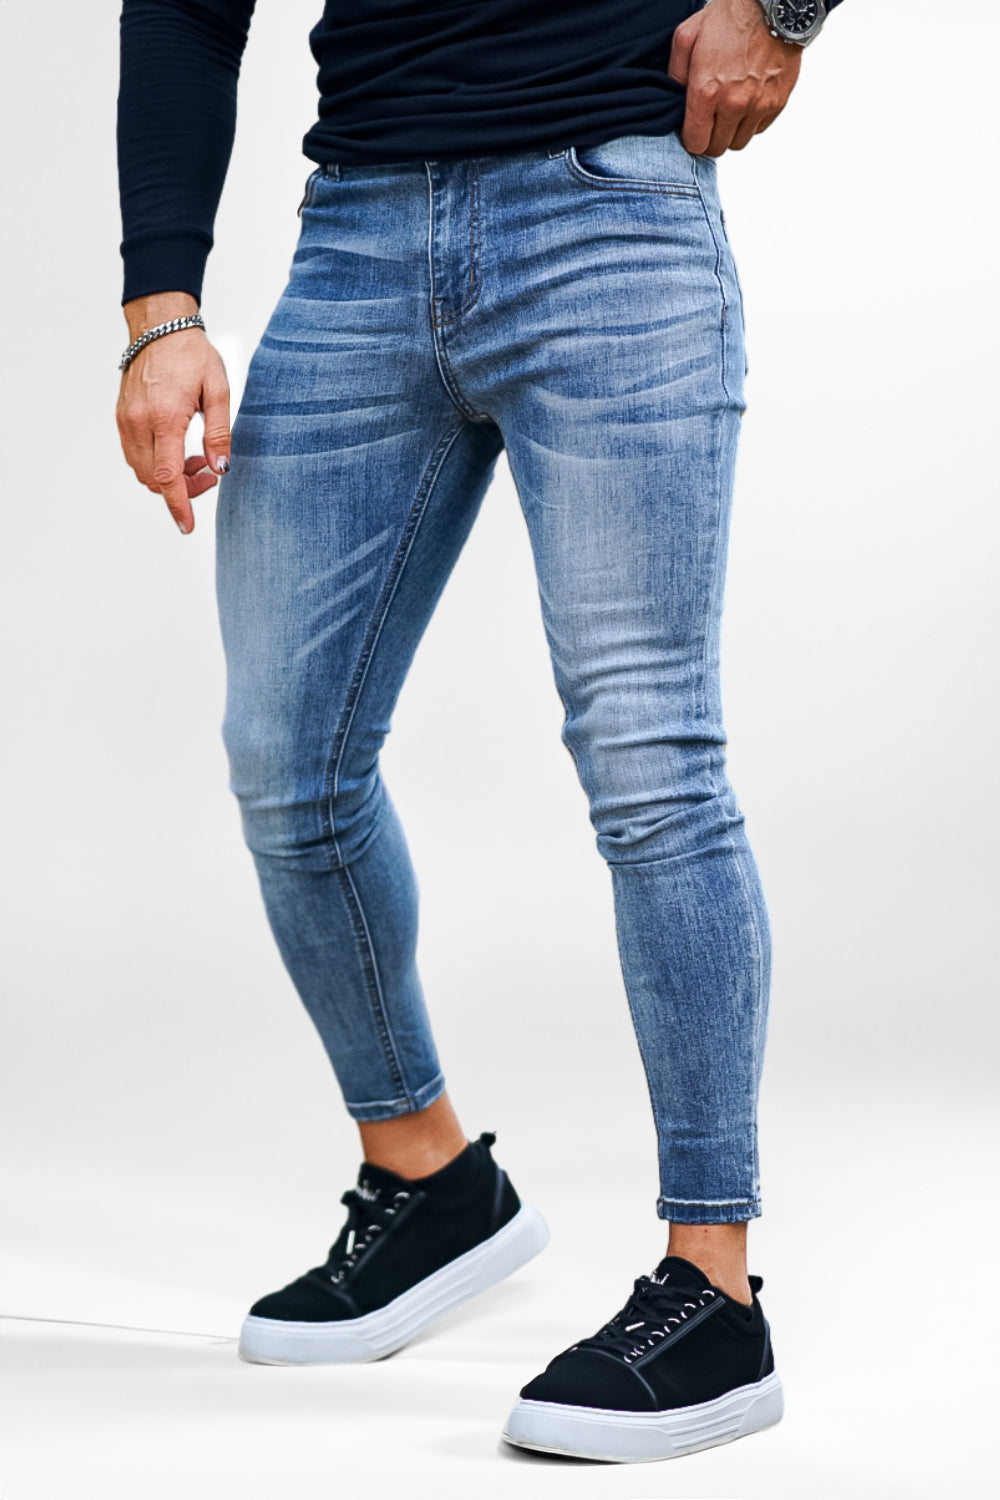 Herren|50% Jeans|Skinny für GINGTTO Skinny Fit Mittelblaue für Rabatt|Skinny – Jeans Fit Jeans|Stretch-Jeans Herren|Herren Jeans Slim